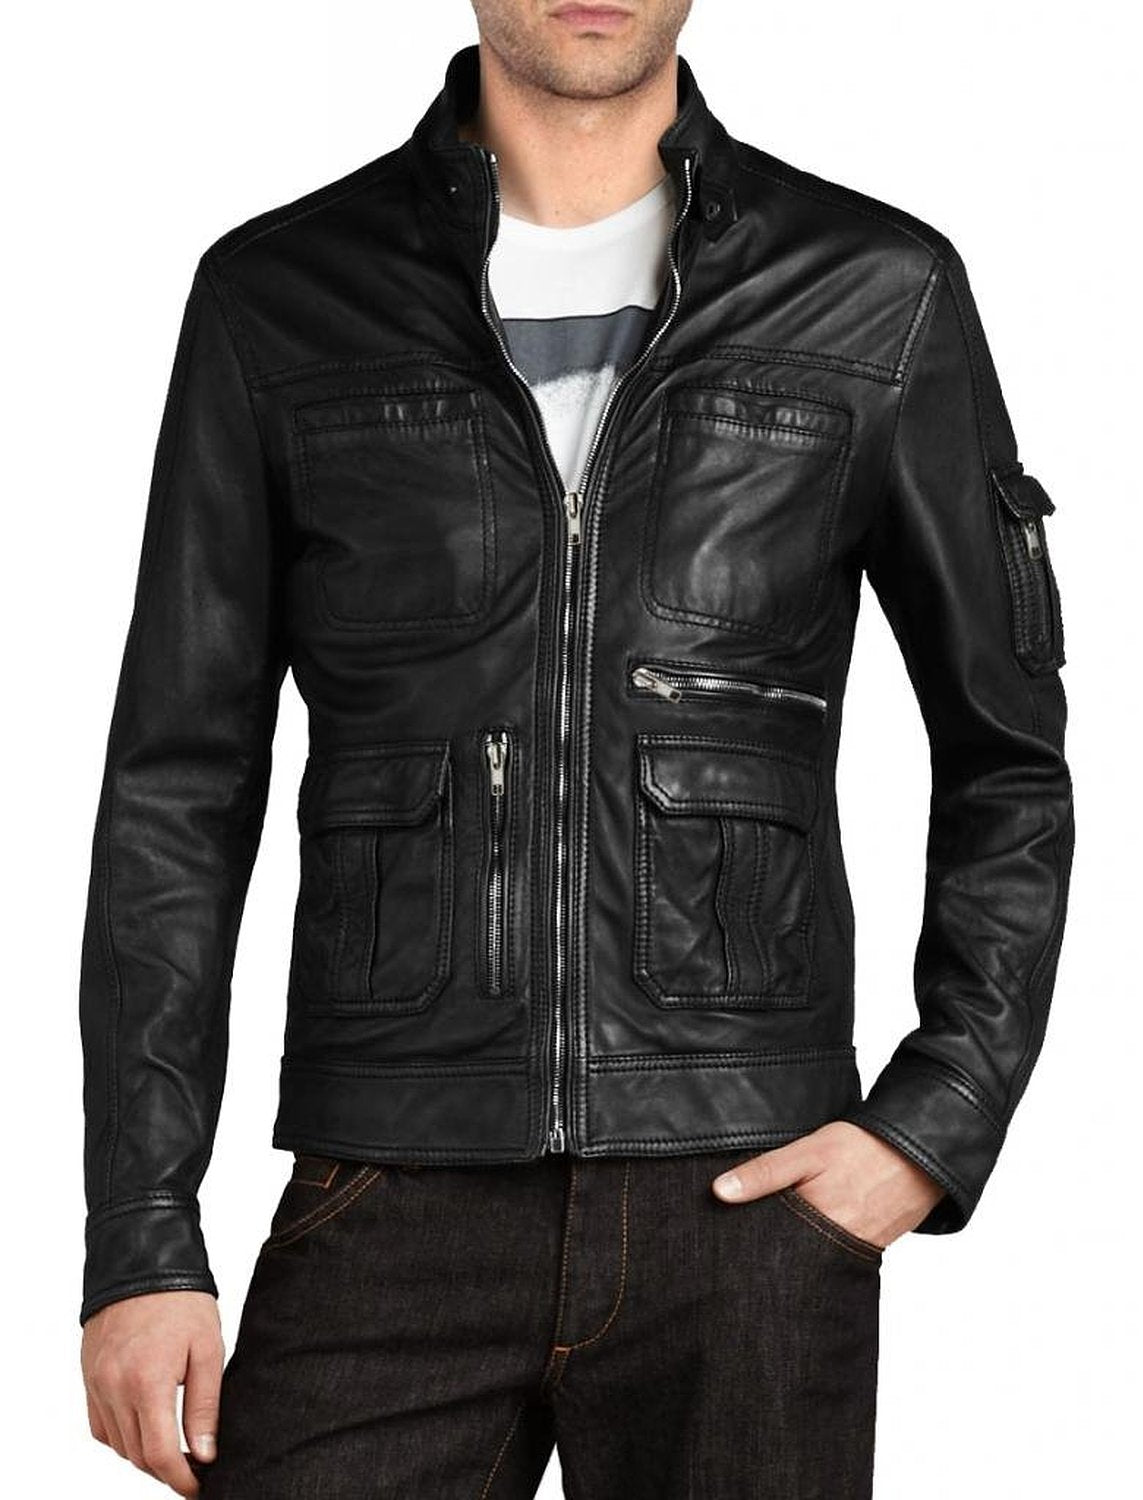 Leather Jackets Hub Mens Genuine Cowhide Leather Jacket (Black, Officer Jacket) - 1501593